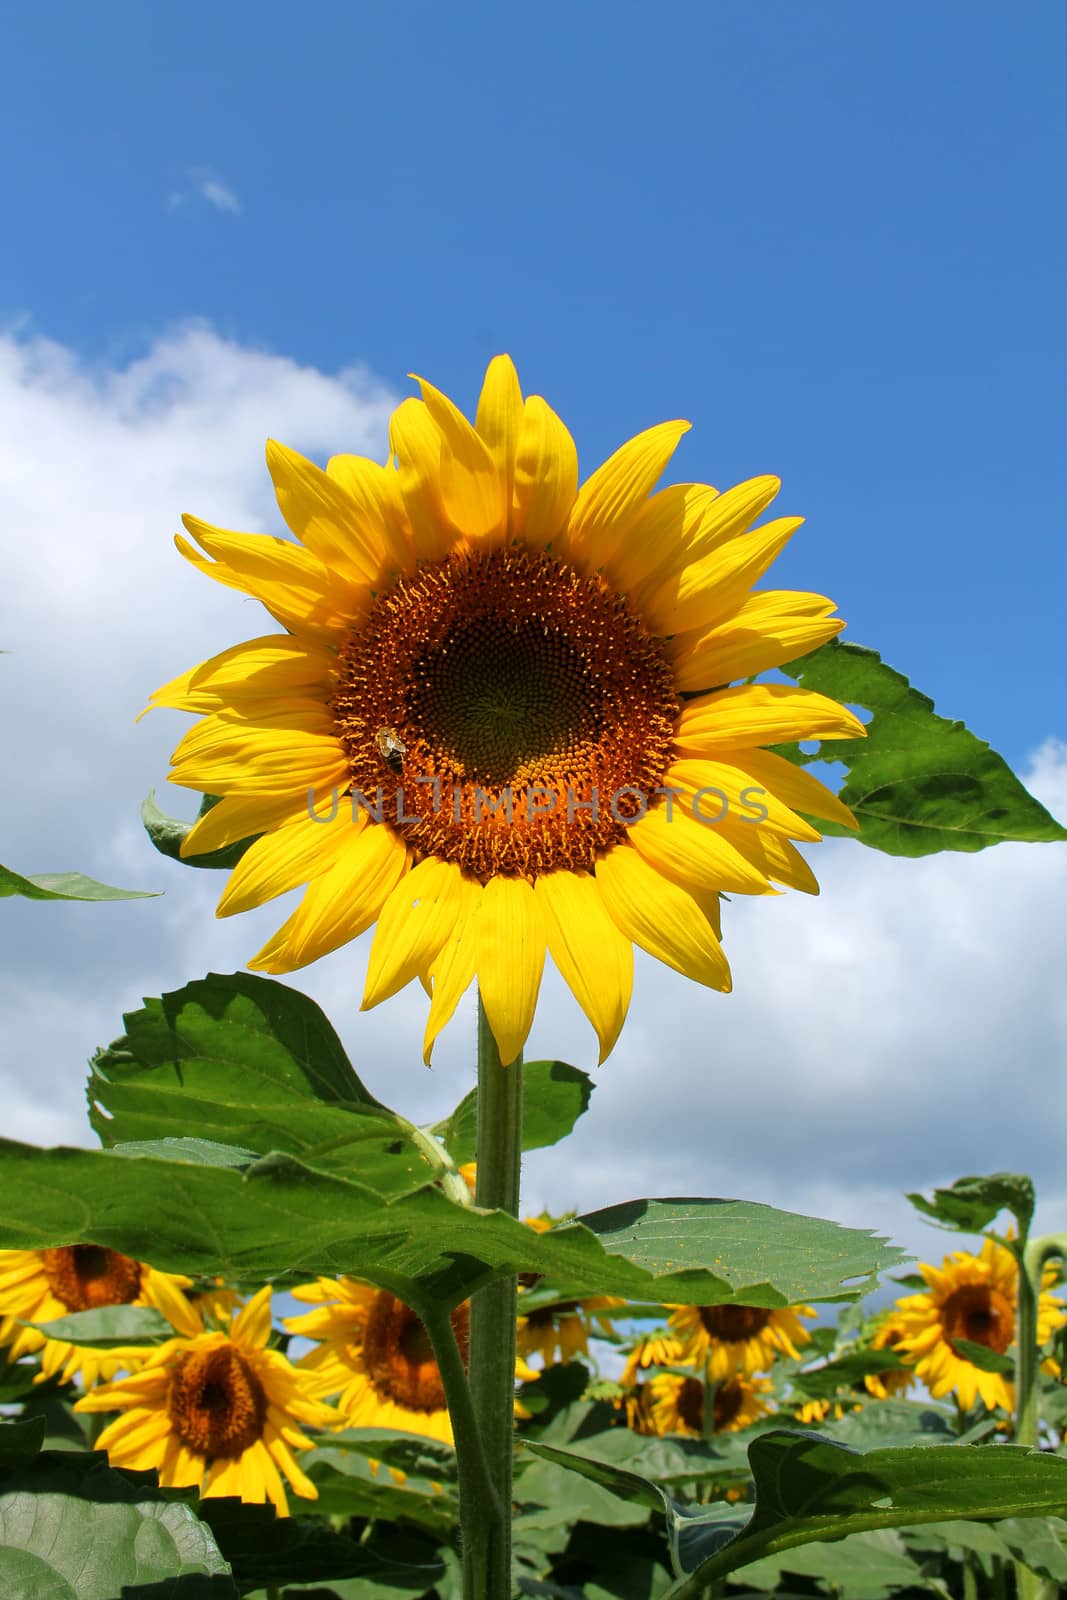 A sunflower on a sunny day